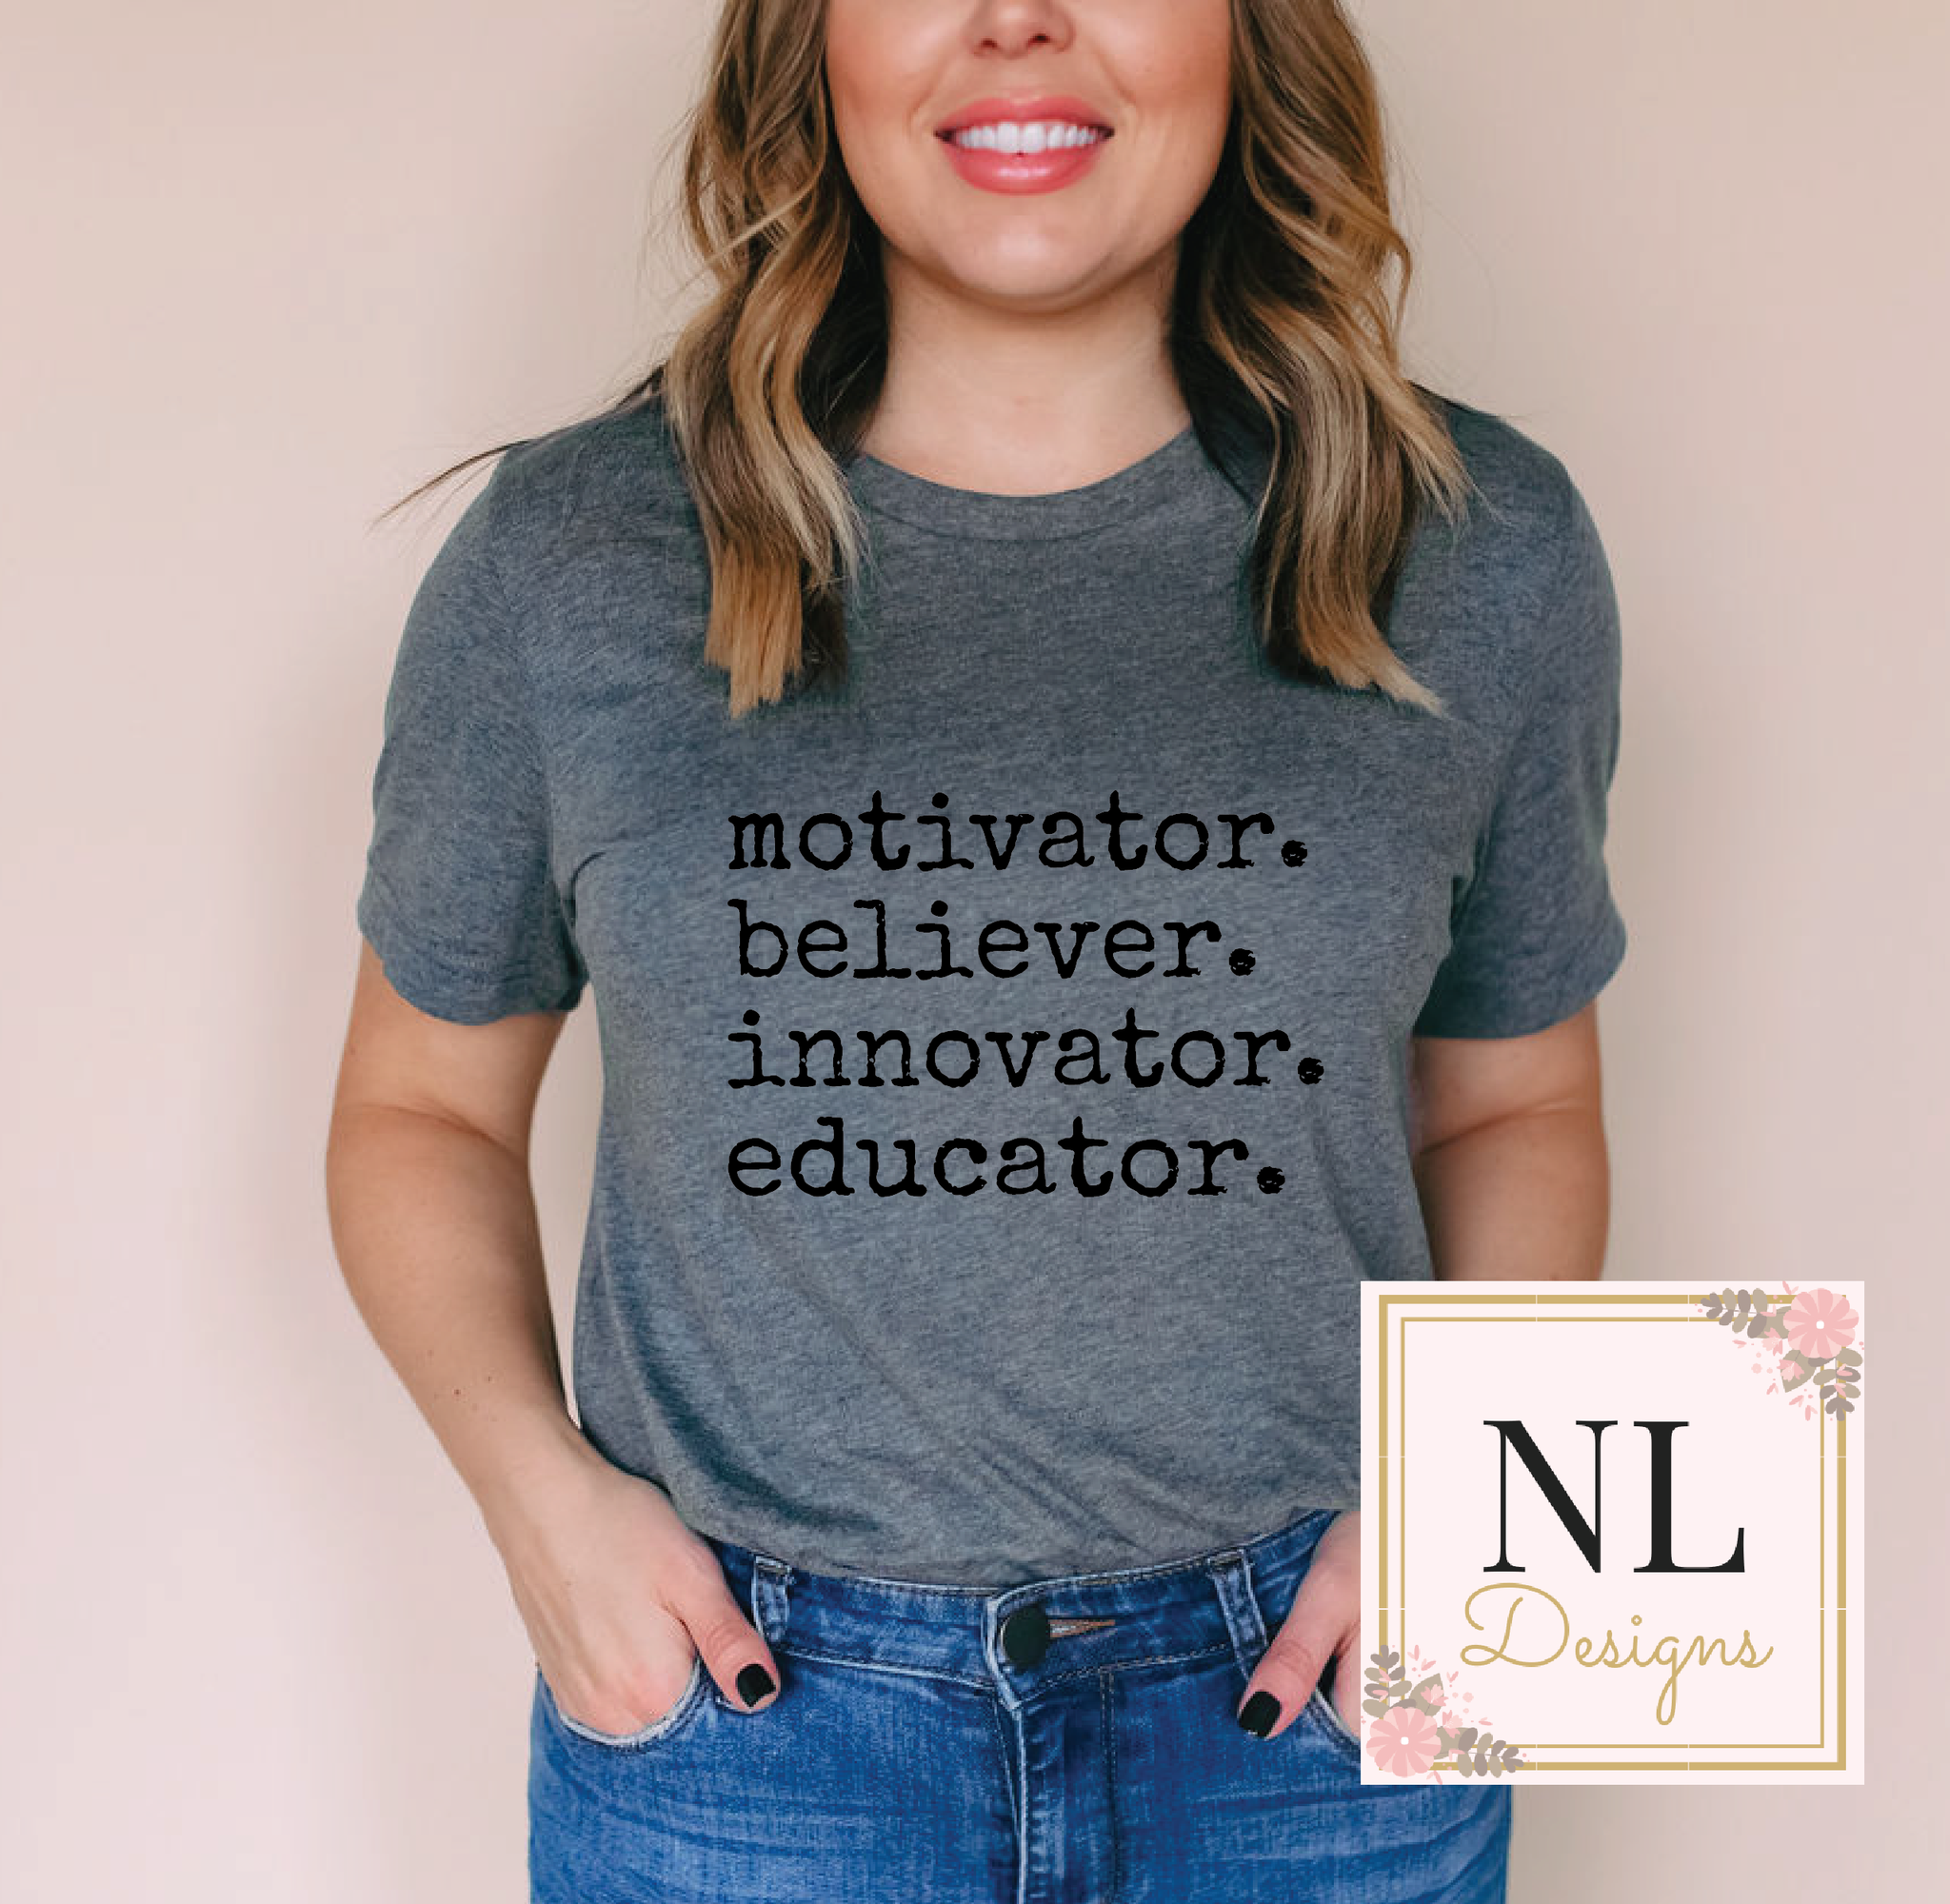 Motivator. Believer. Innovator. Educator.